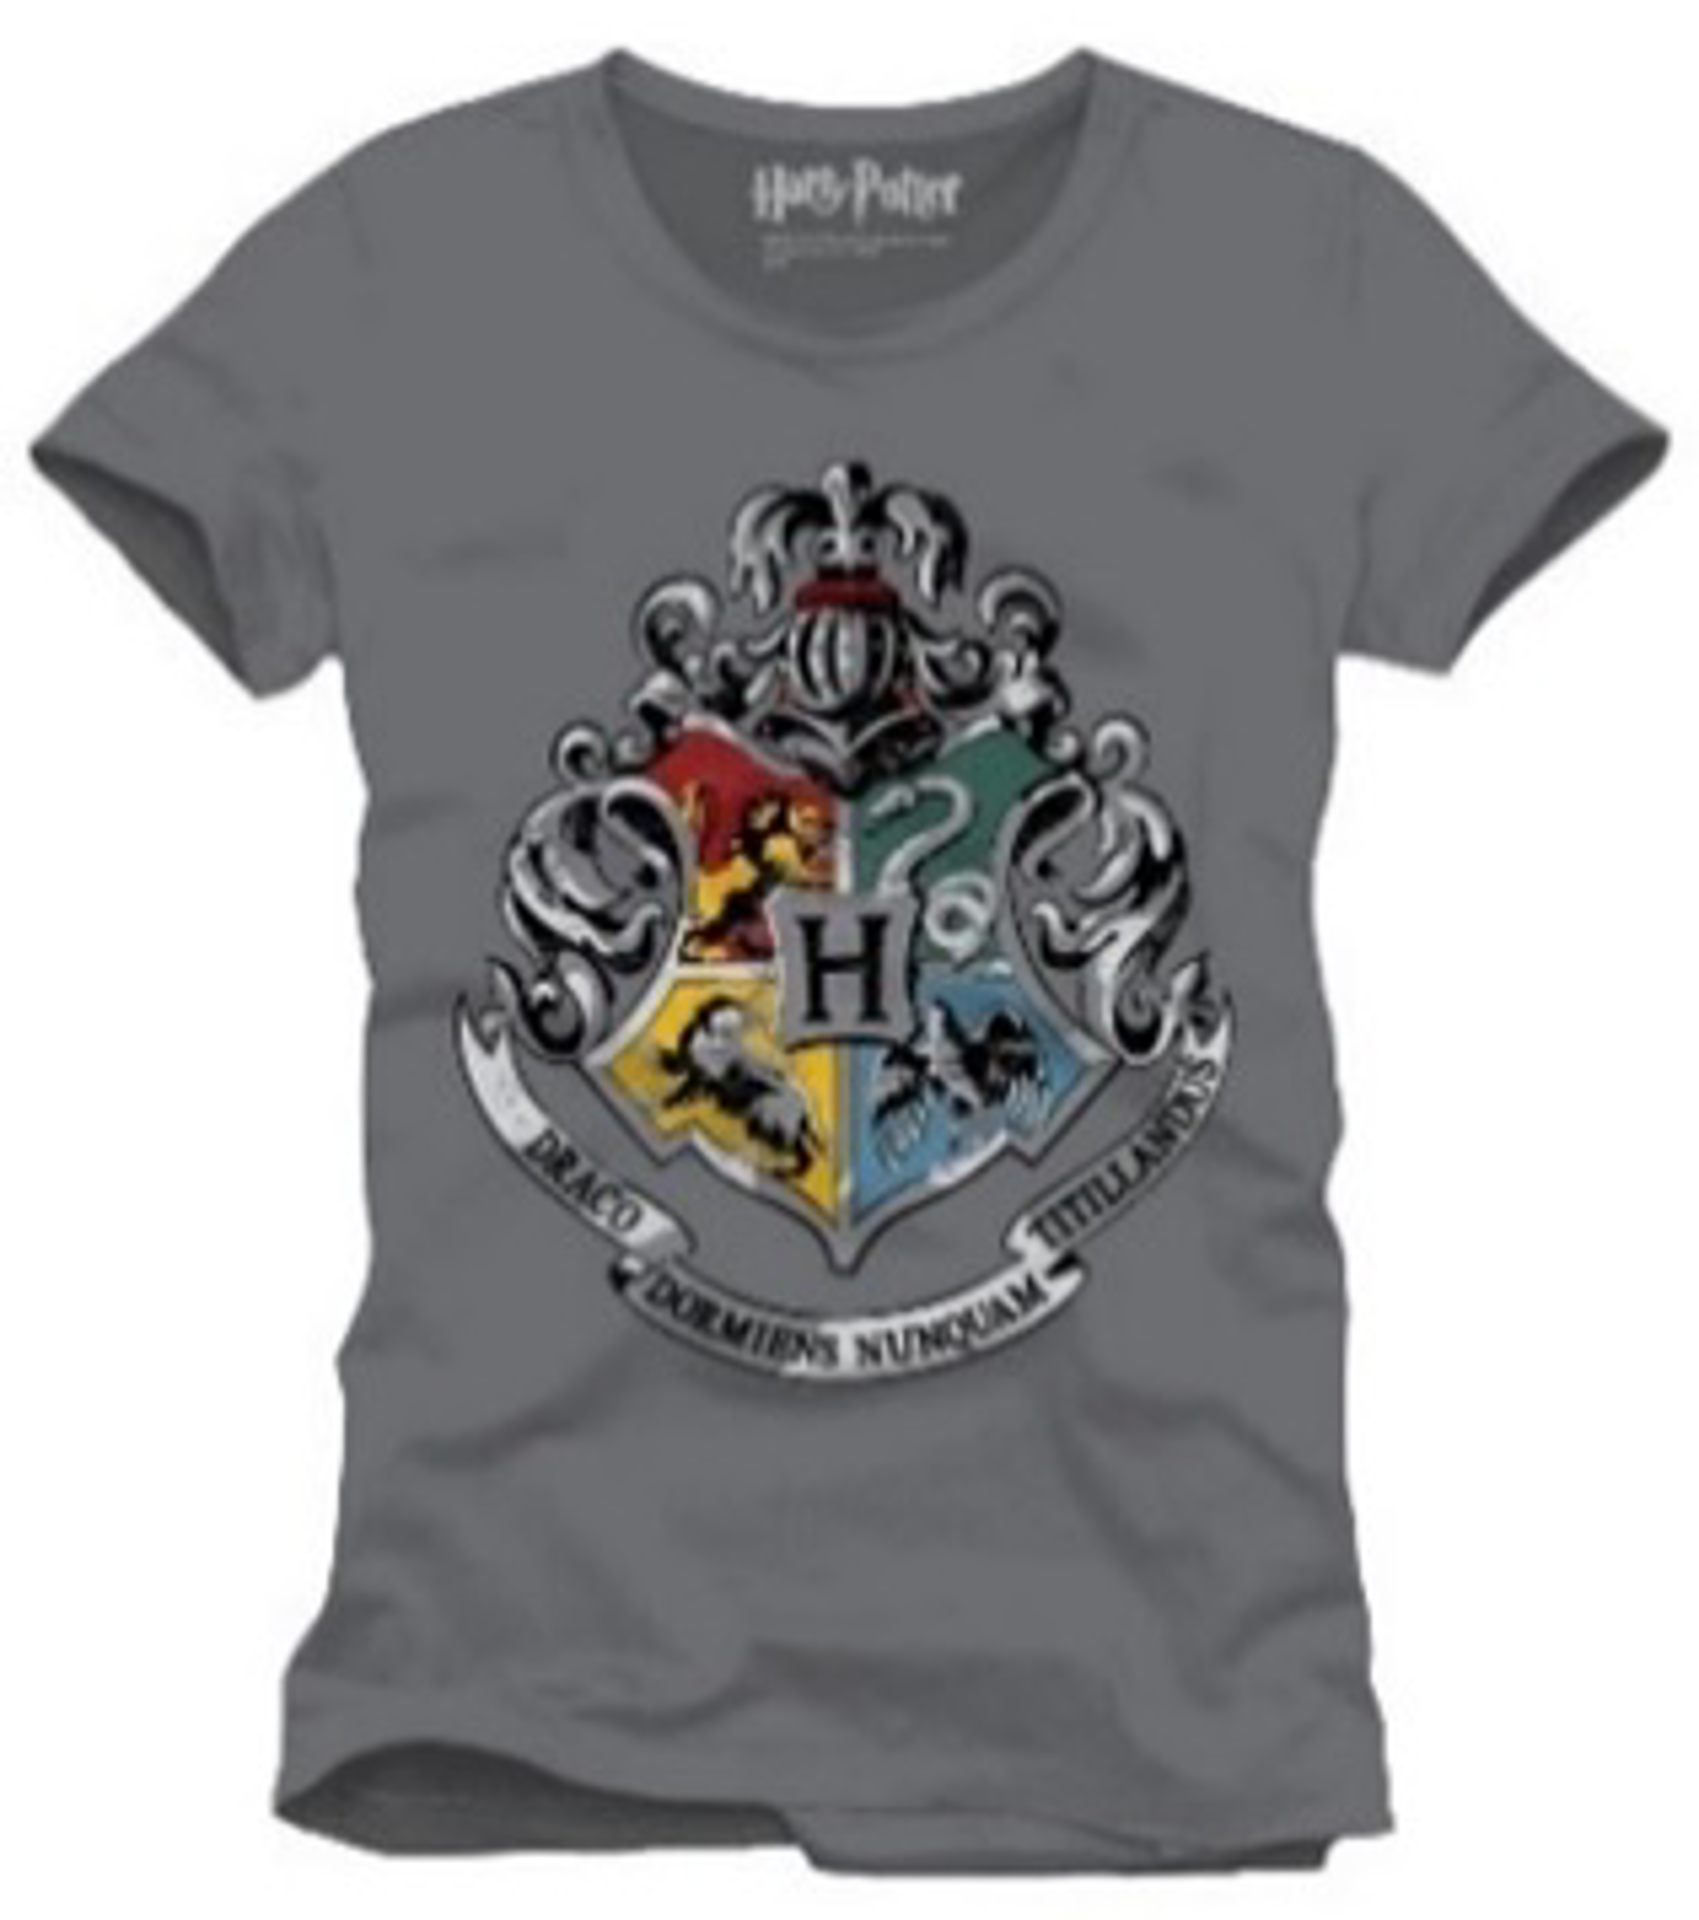 Harry Potter - Hogwarts 4 Houses Crest Anthracite T-Shirt - L